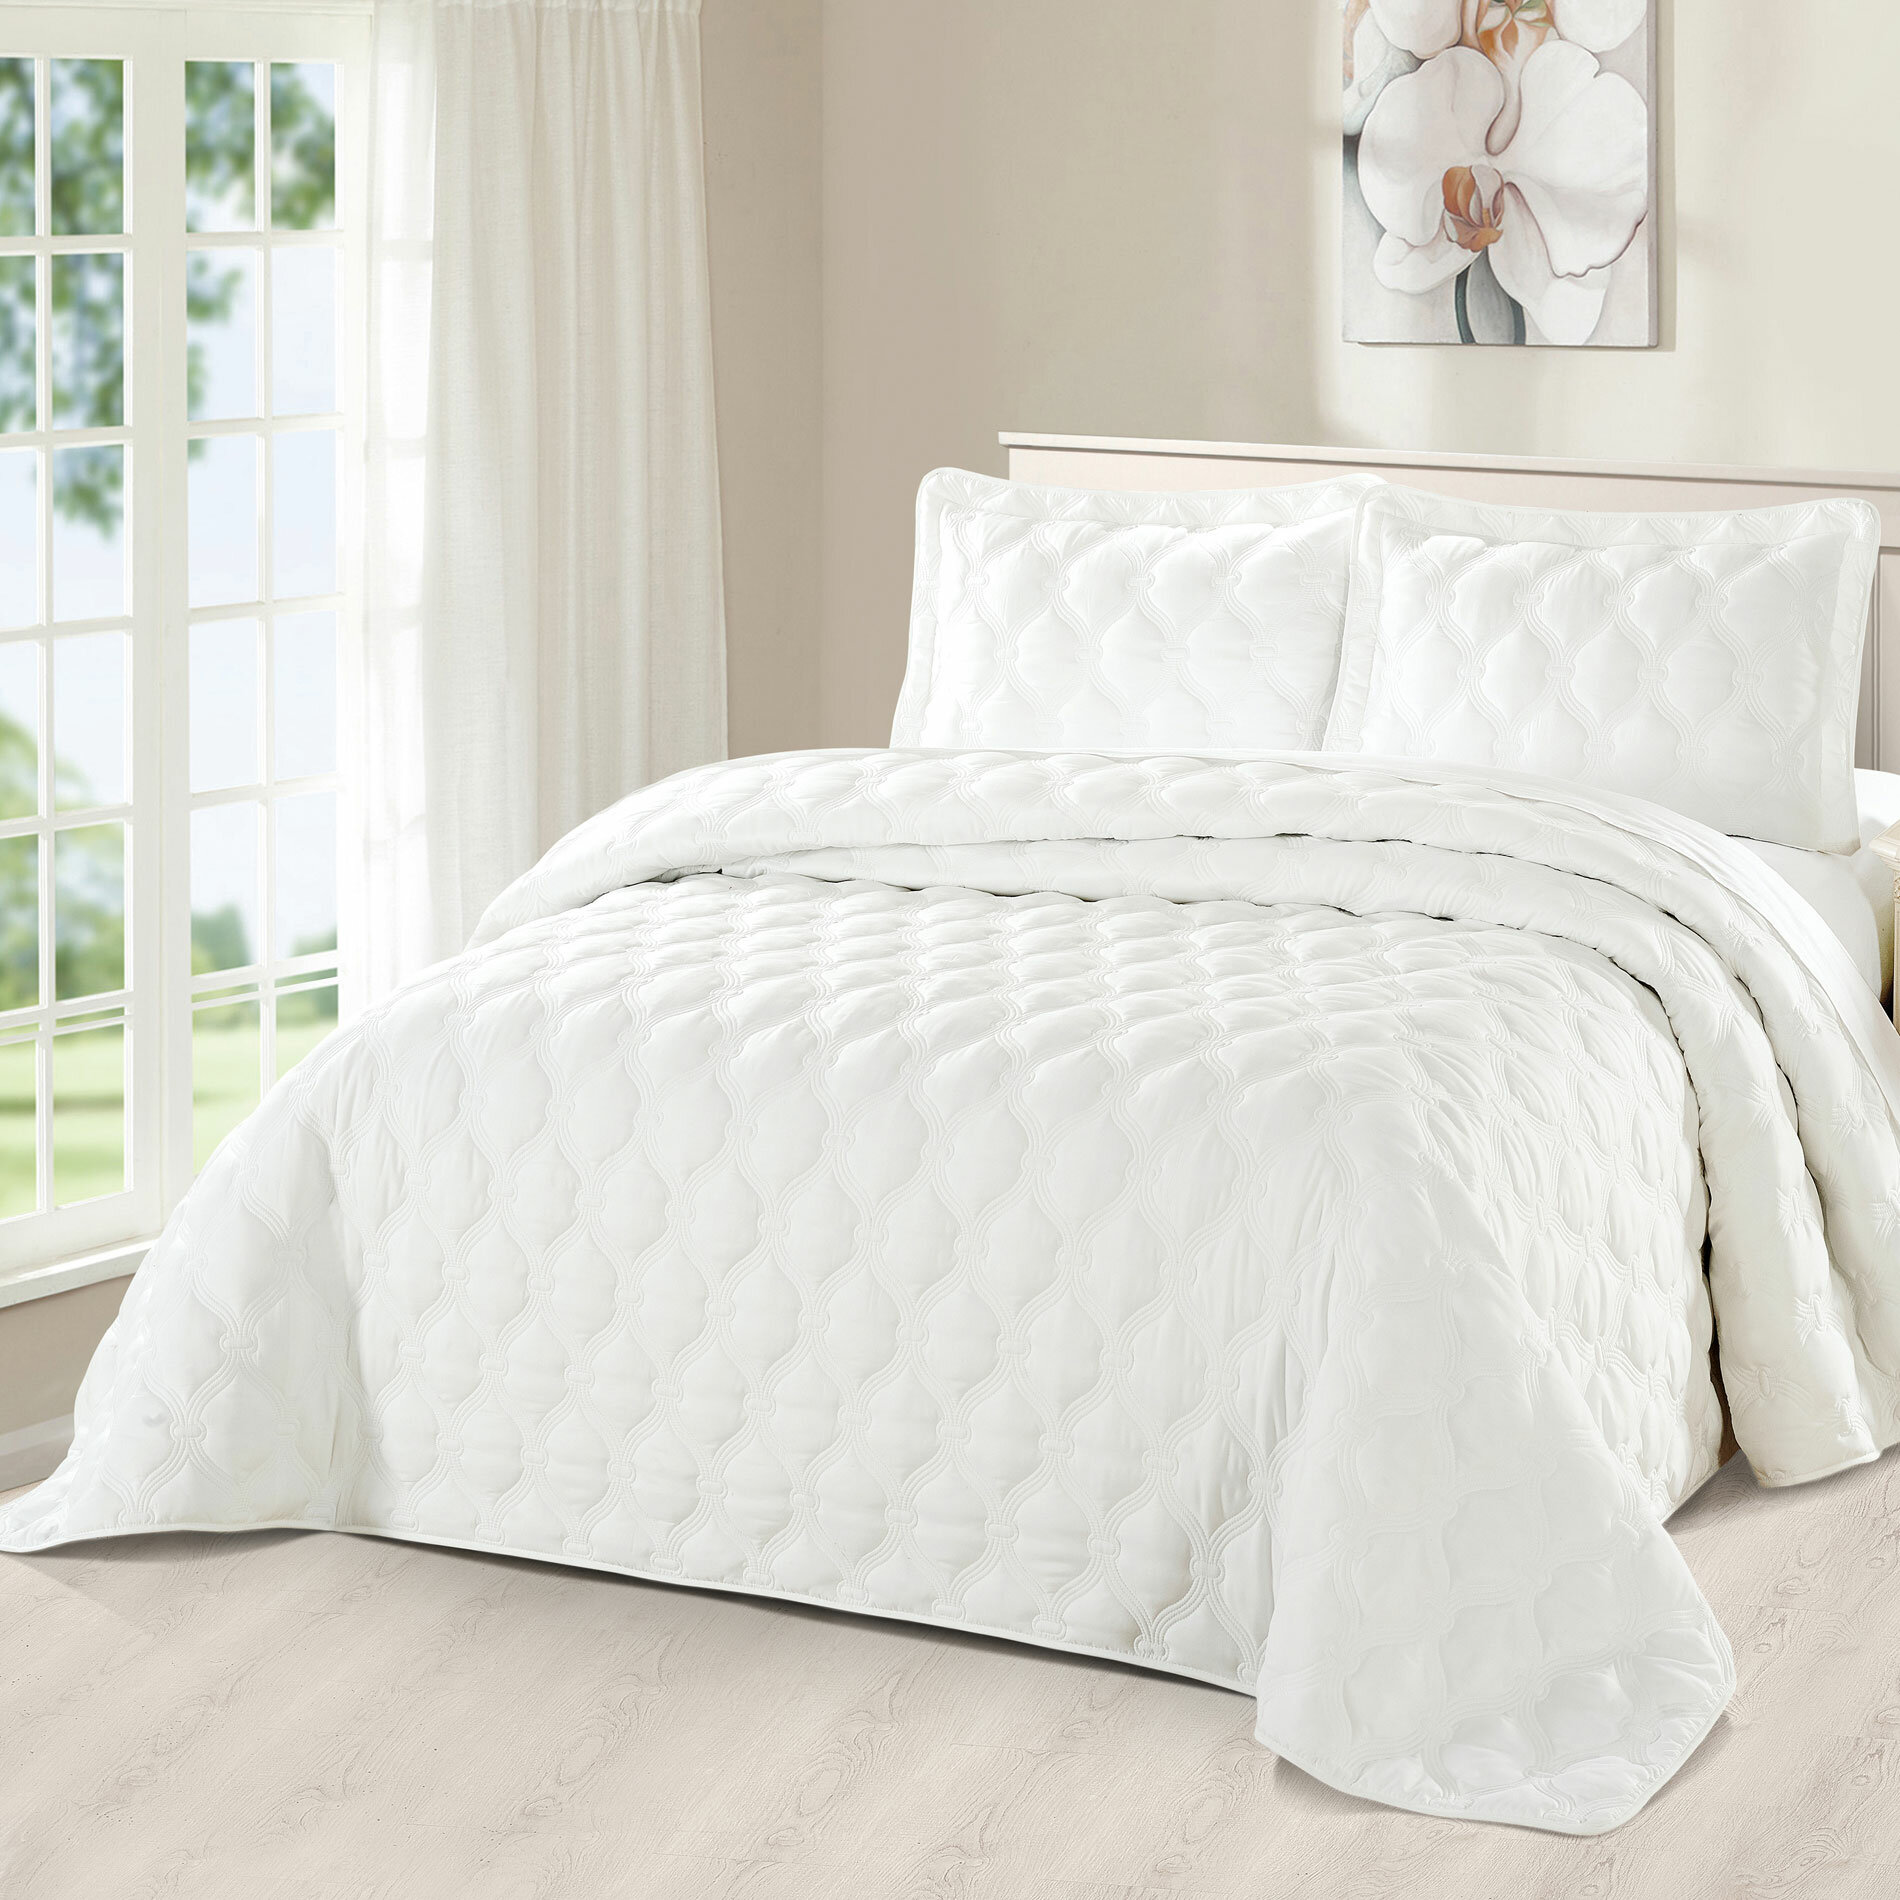 Serenta 3 Piece Solid Reversible Microfiber Quilts Bedspread Coverlet Set